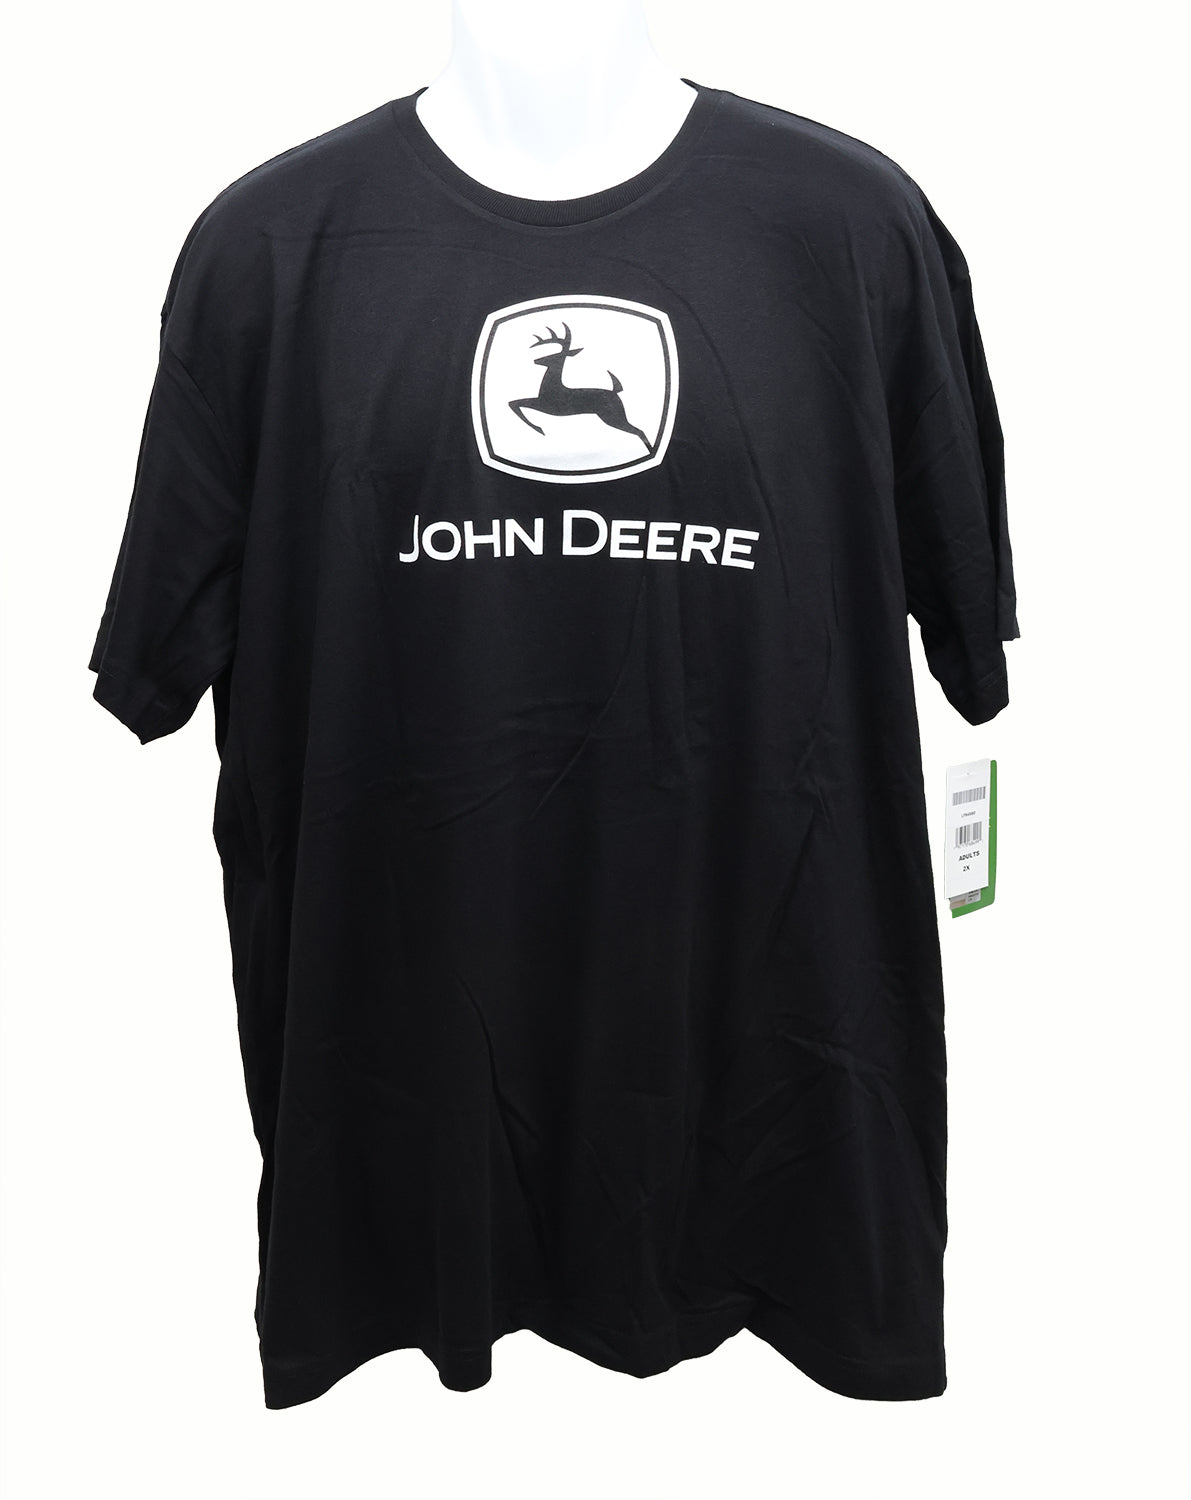 John Deere Men's (SIZE 2X) Black Glow in the Dark T-Shirt - LP84680